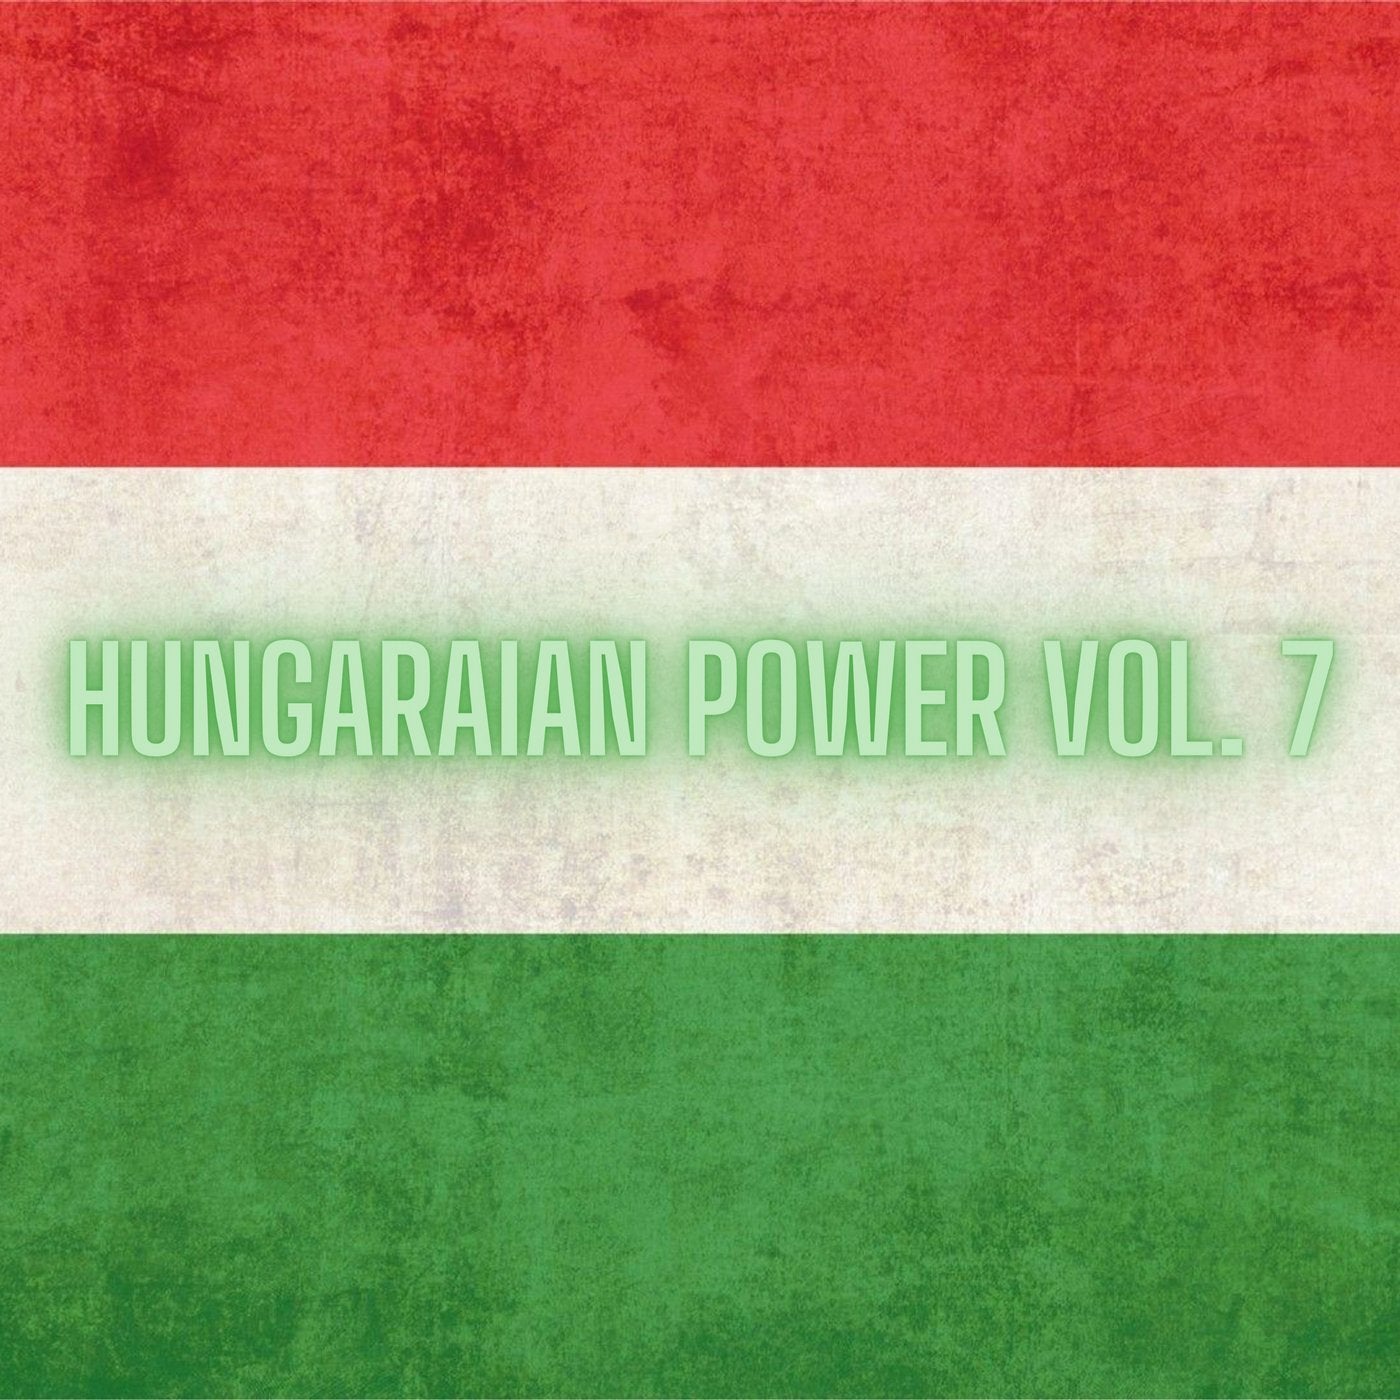 Hungarian Power Vol. 7